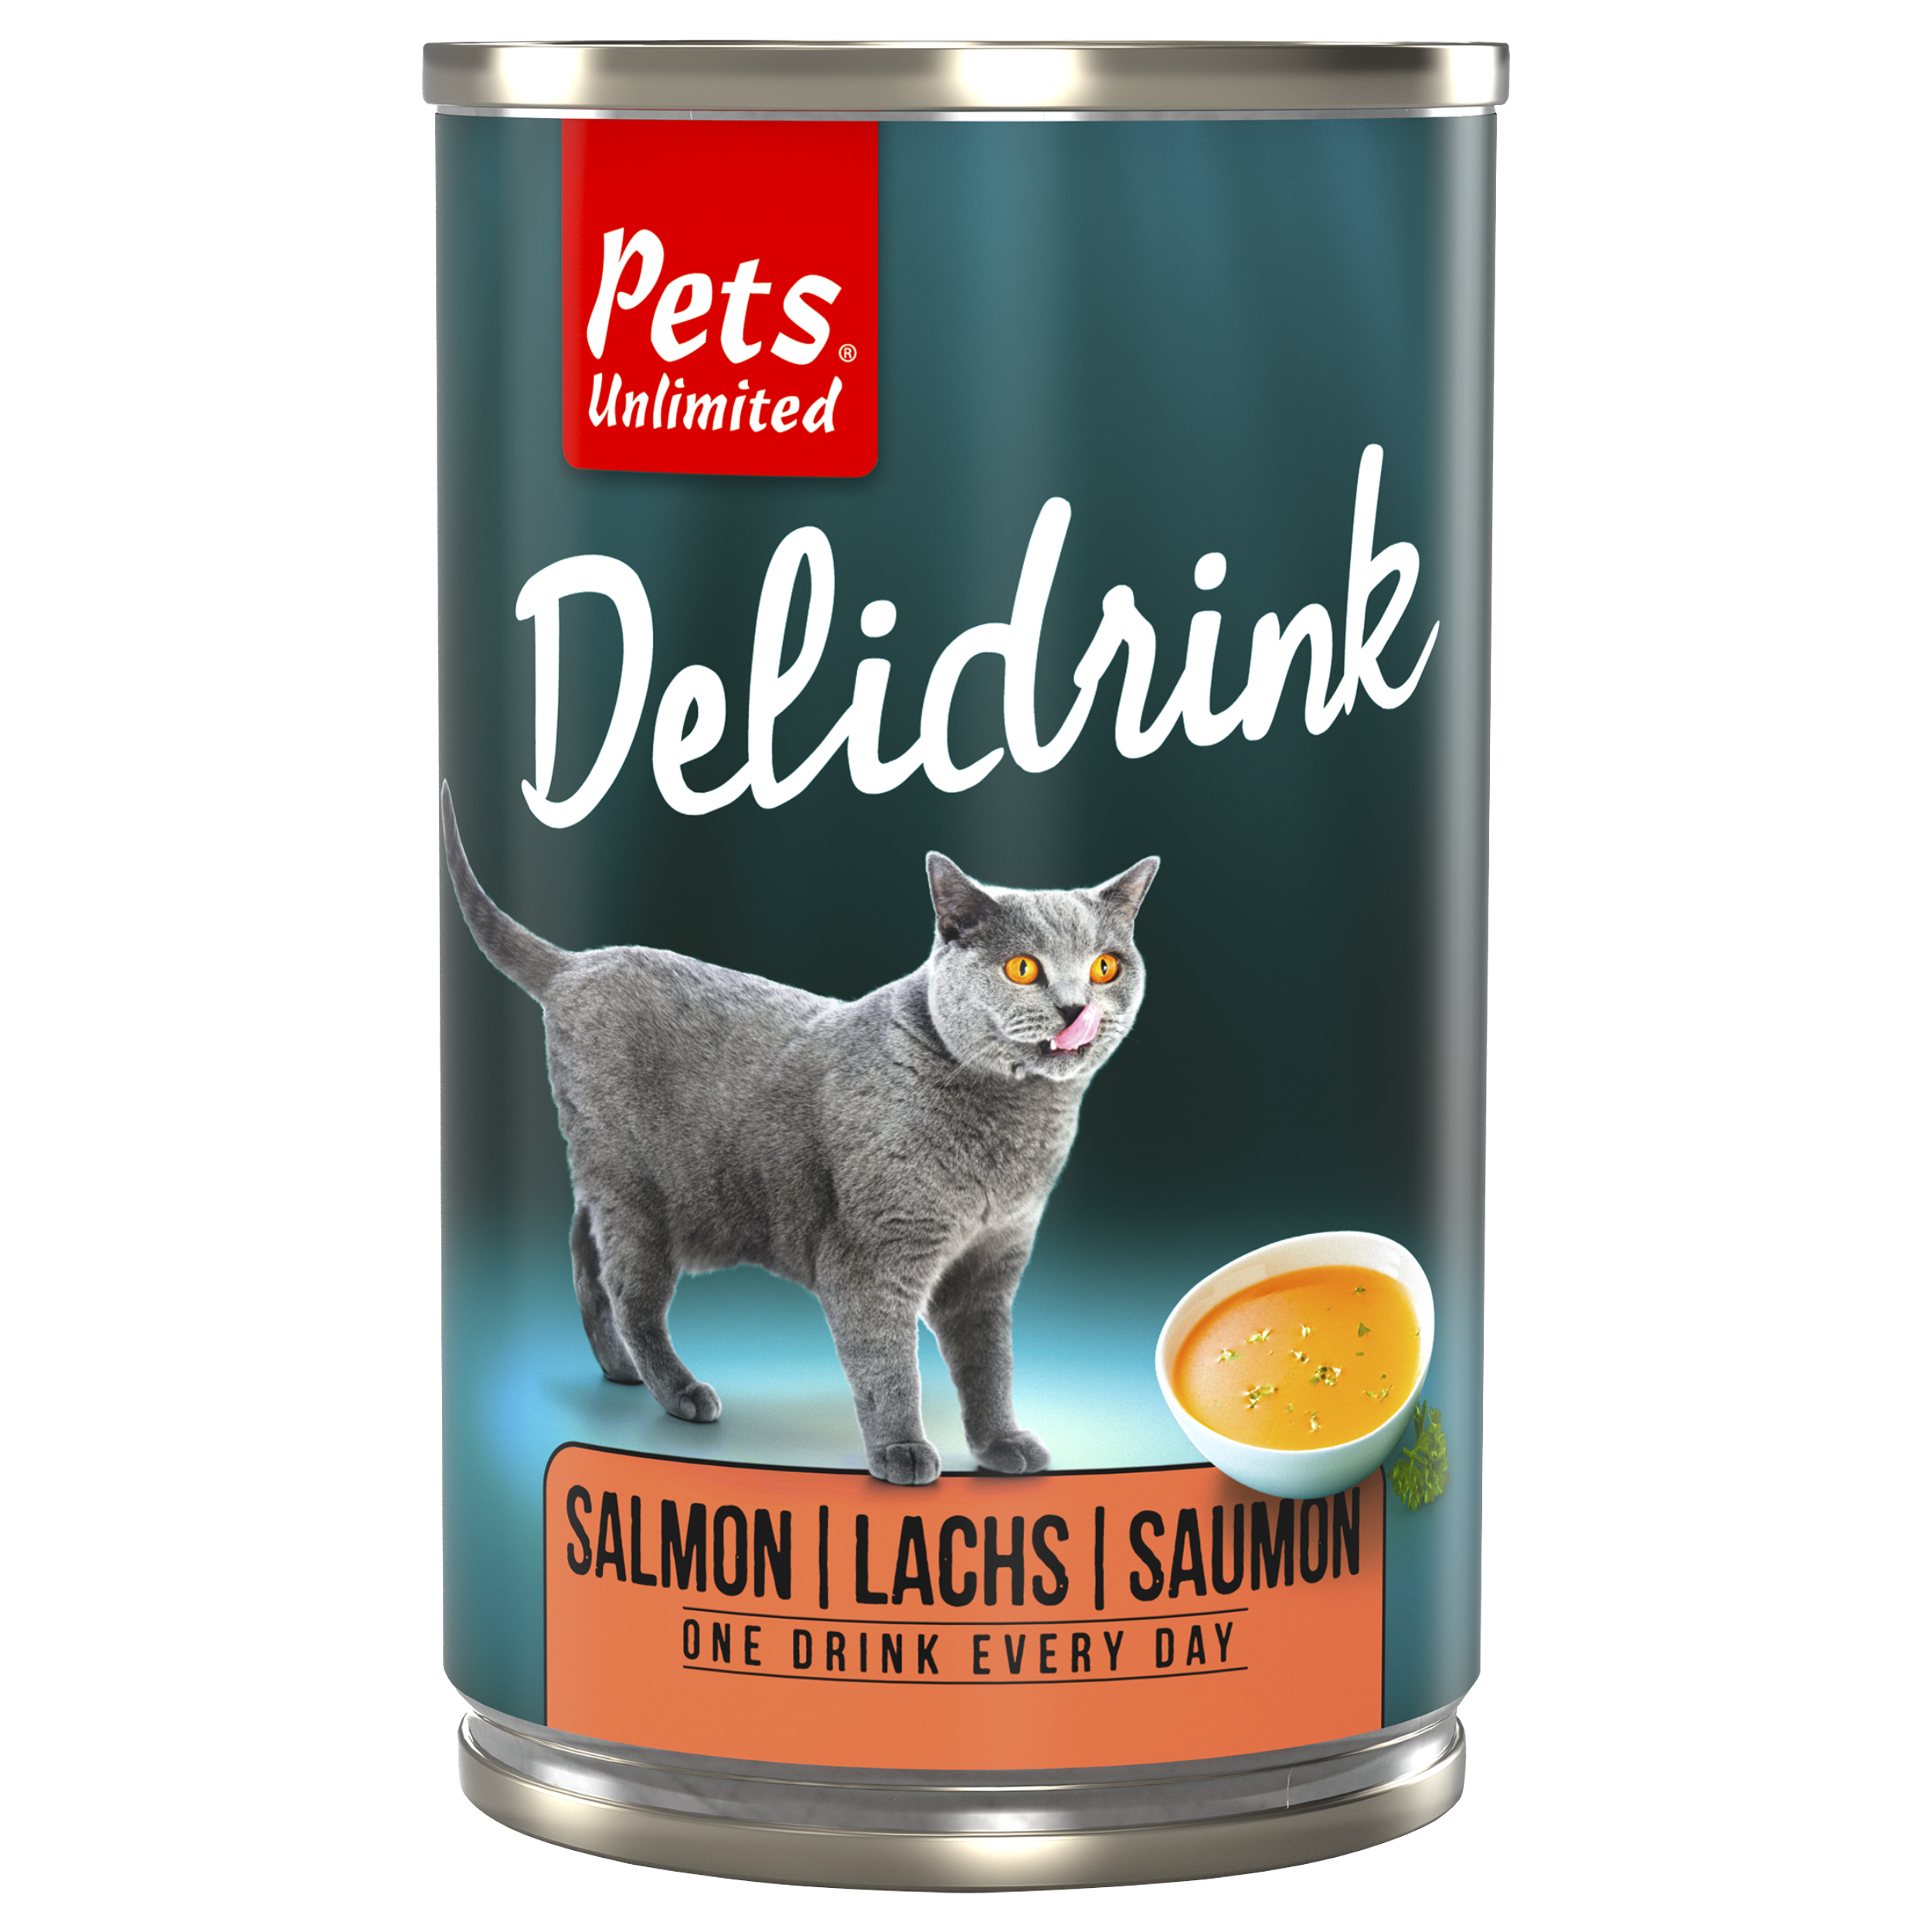 Pets Unlimited Delidrink Salmon 135ml